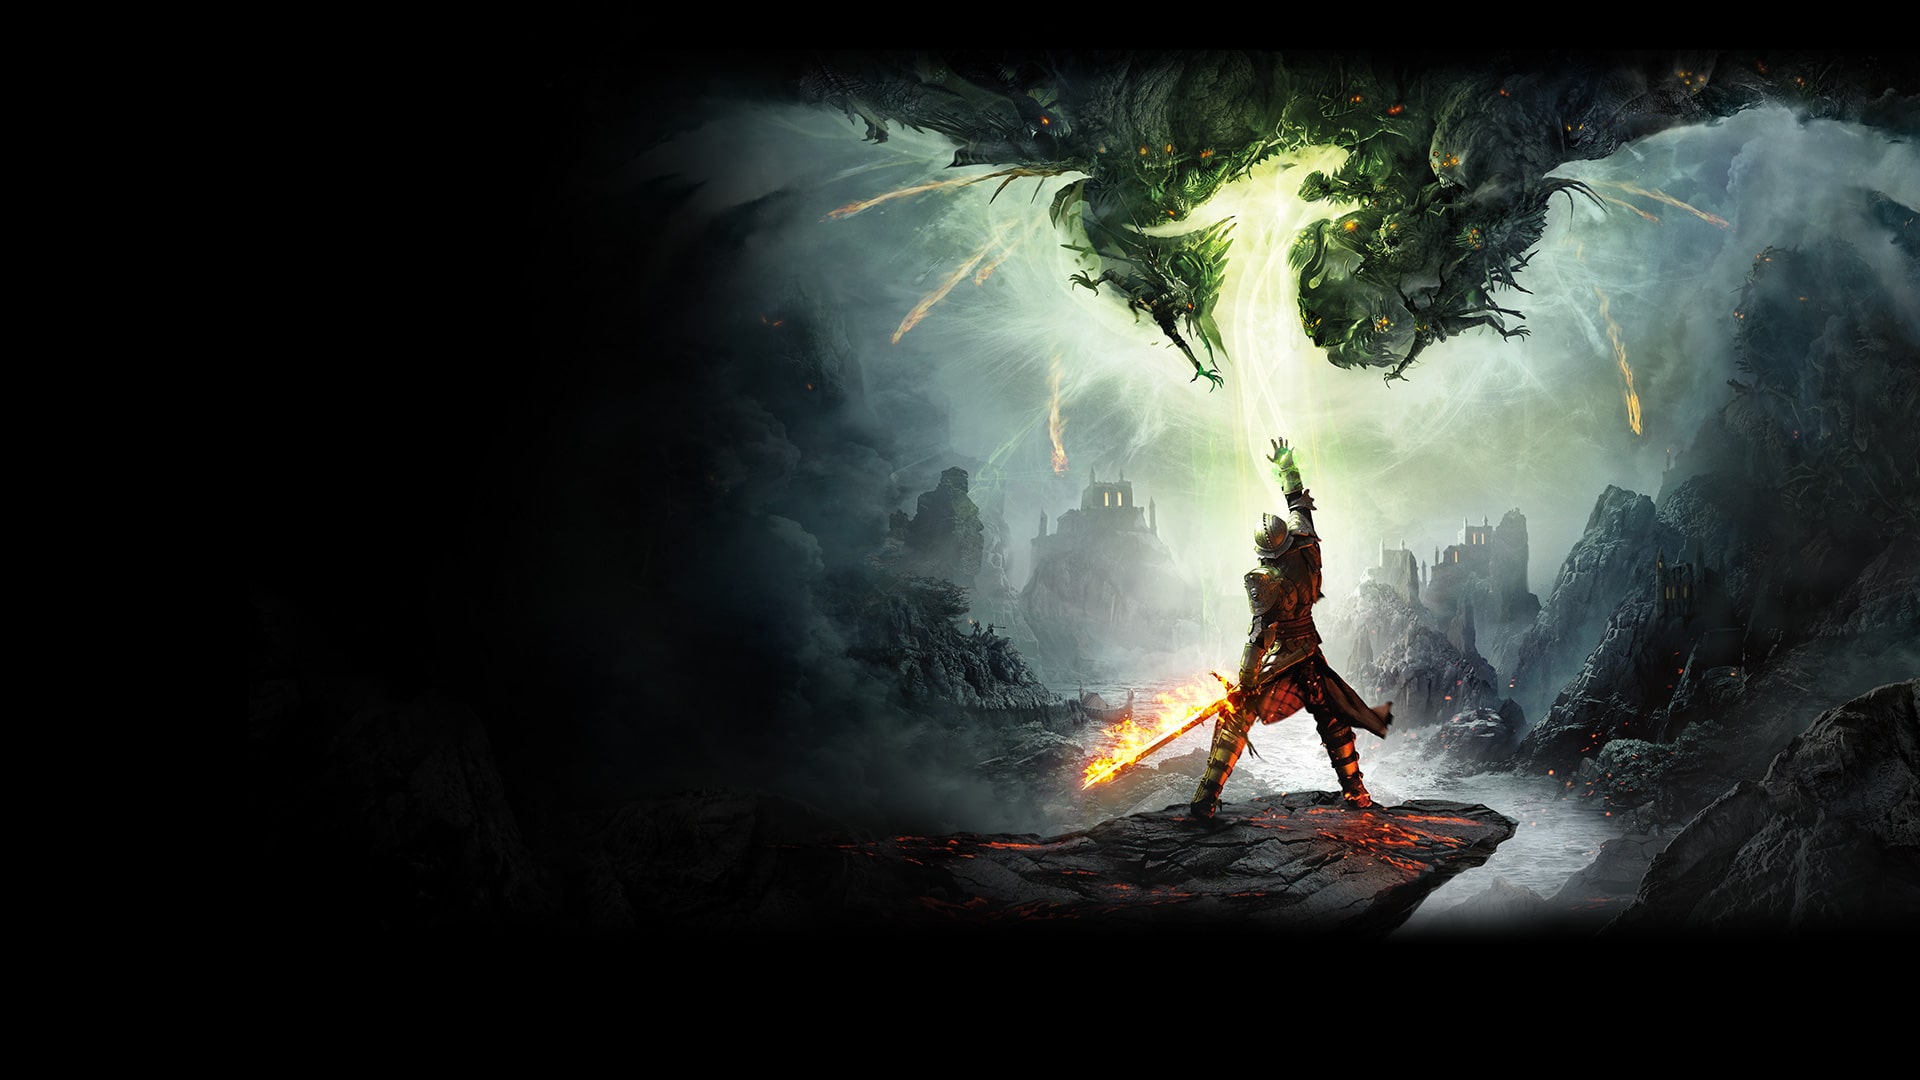 Dragon Age™: Инквизиция - издание «Игра года»